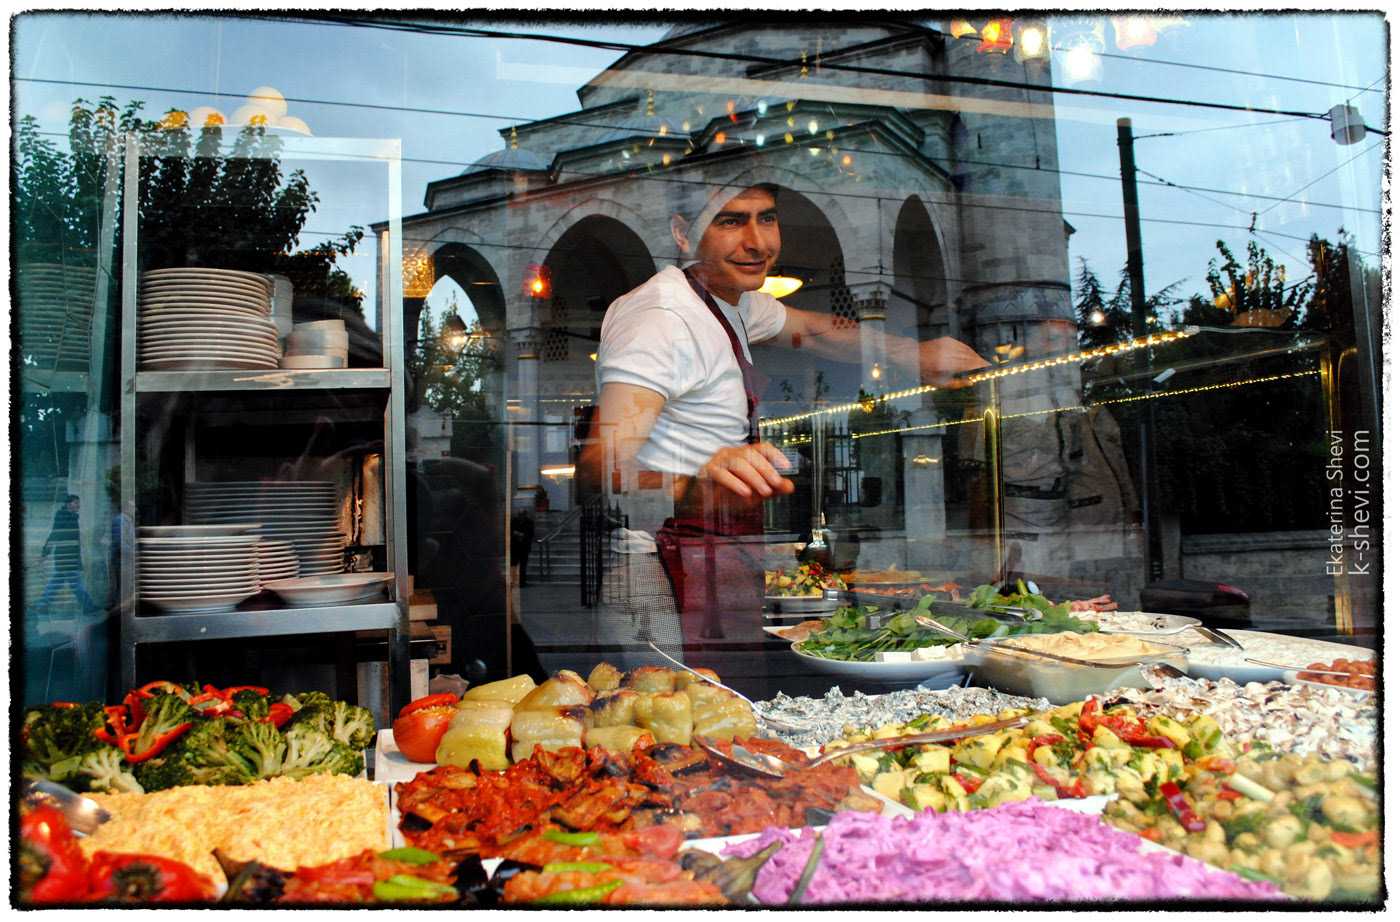 Обмен в стамбуле. Турецкая уличная кухня. Стамбул гастрономия. Стамбул уличные кафе. Турецкая уличная еда в Стамбуле.